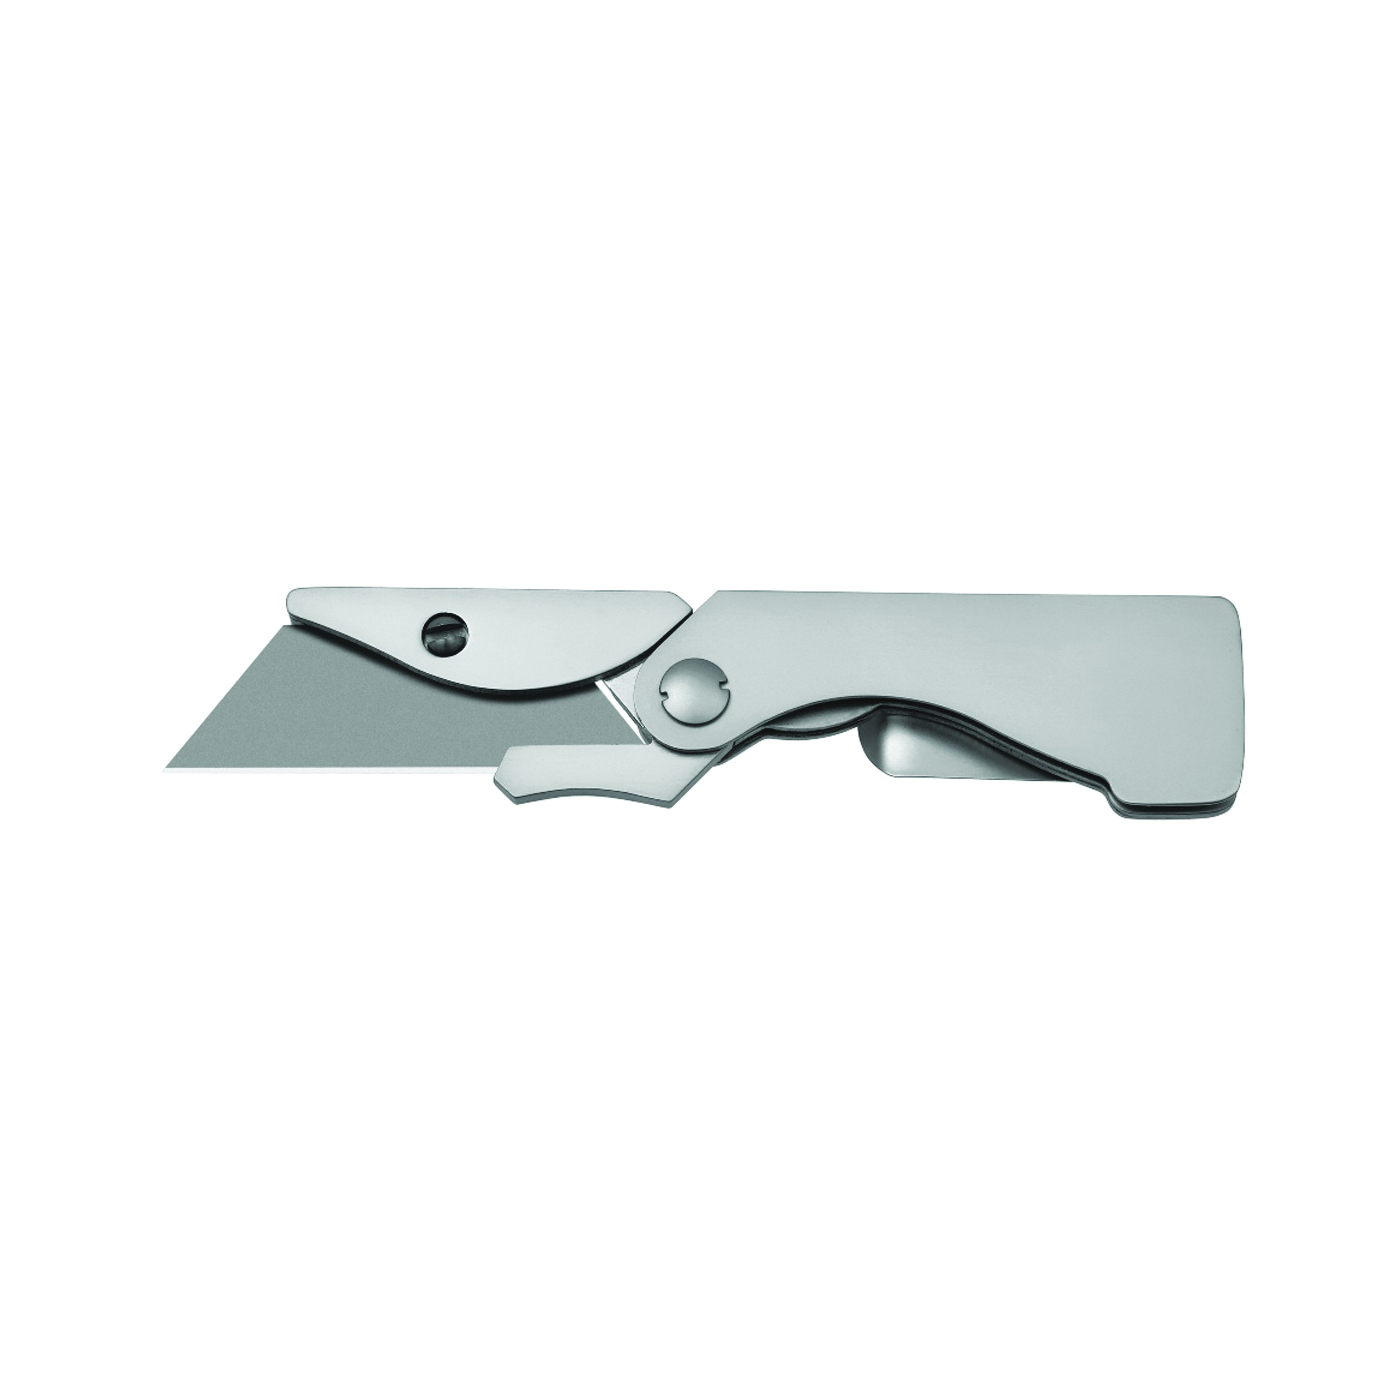 22-41830 Folding Knife, 1.7 in L Blade, High Carbon K5 Blade